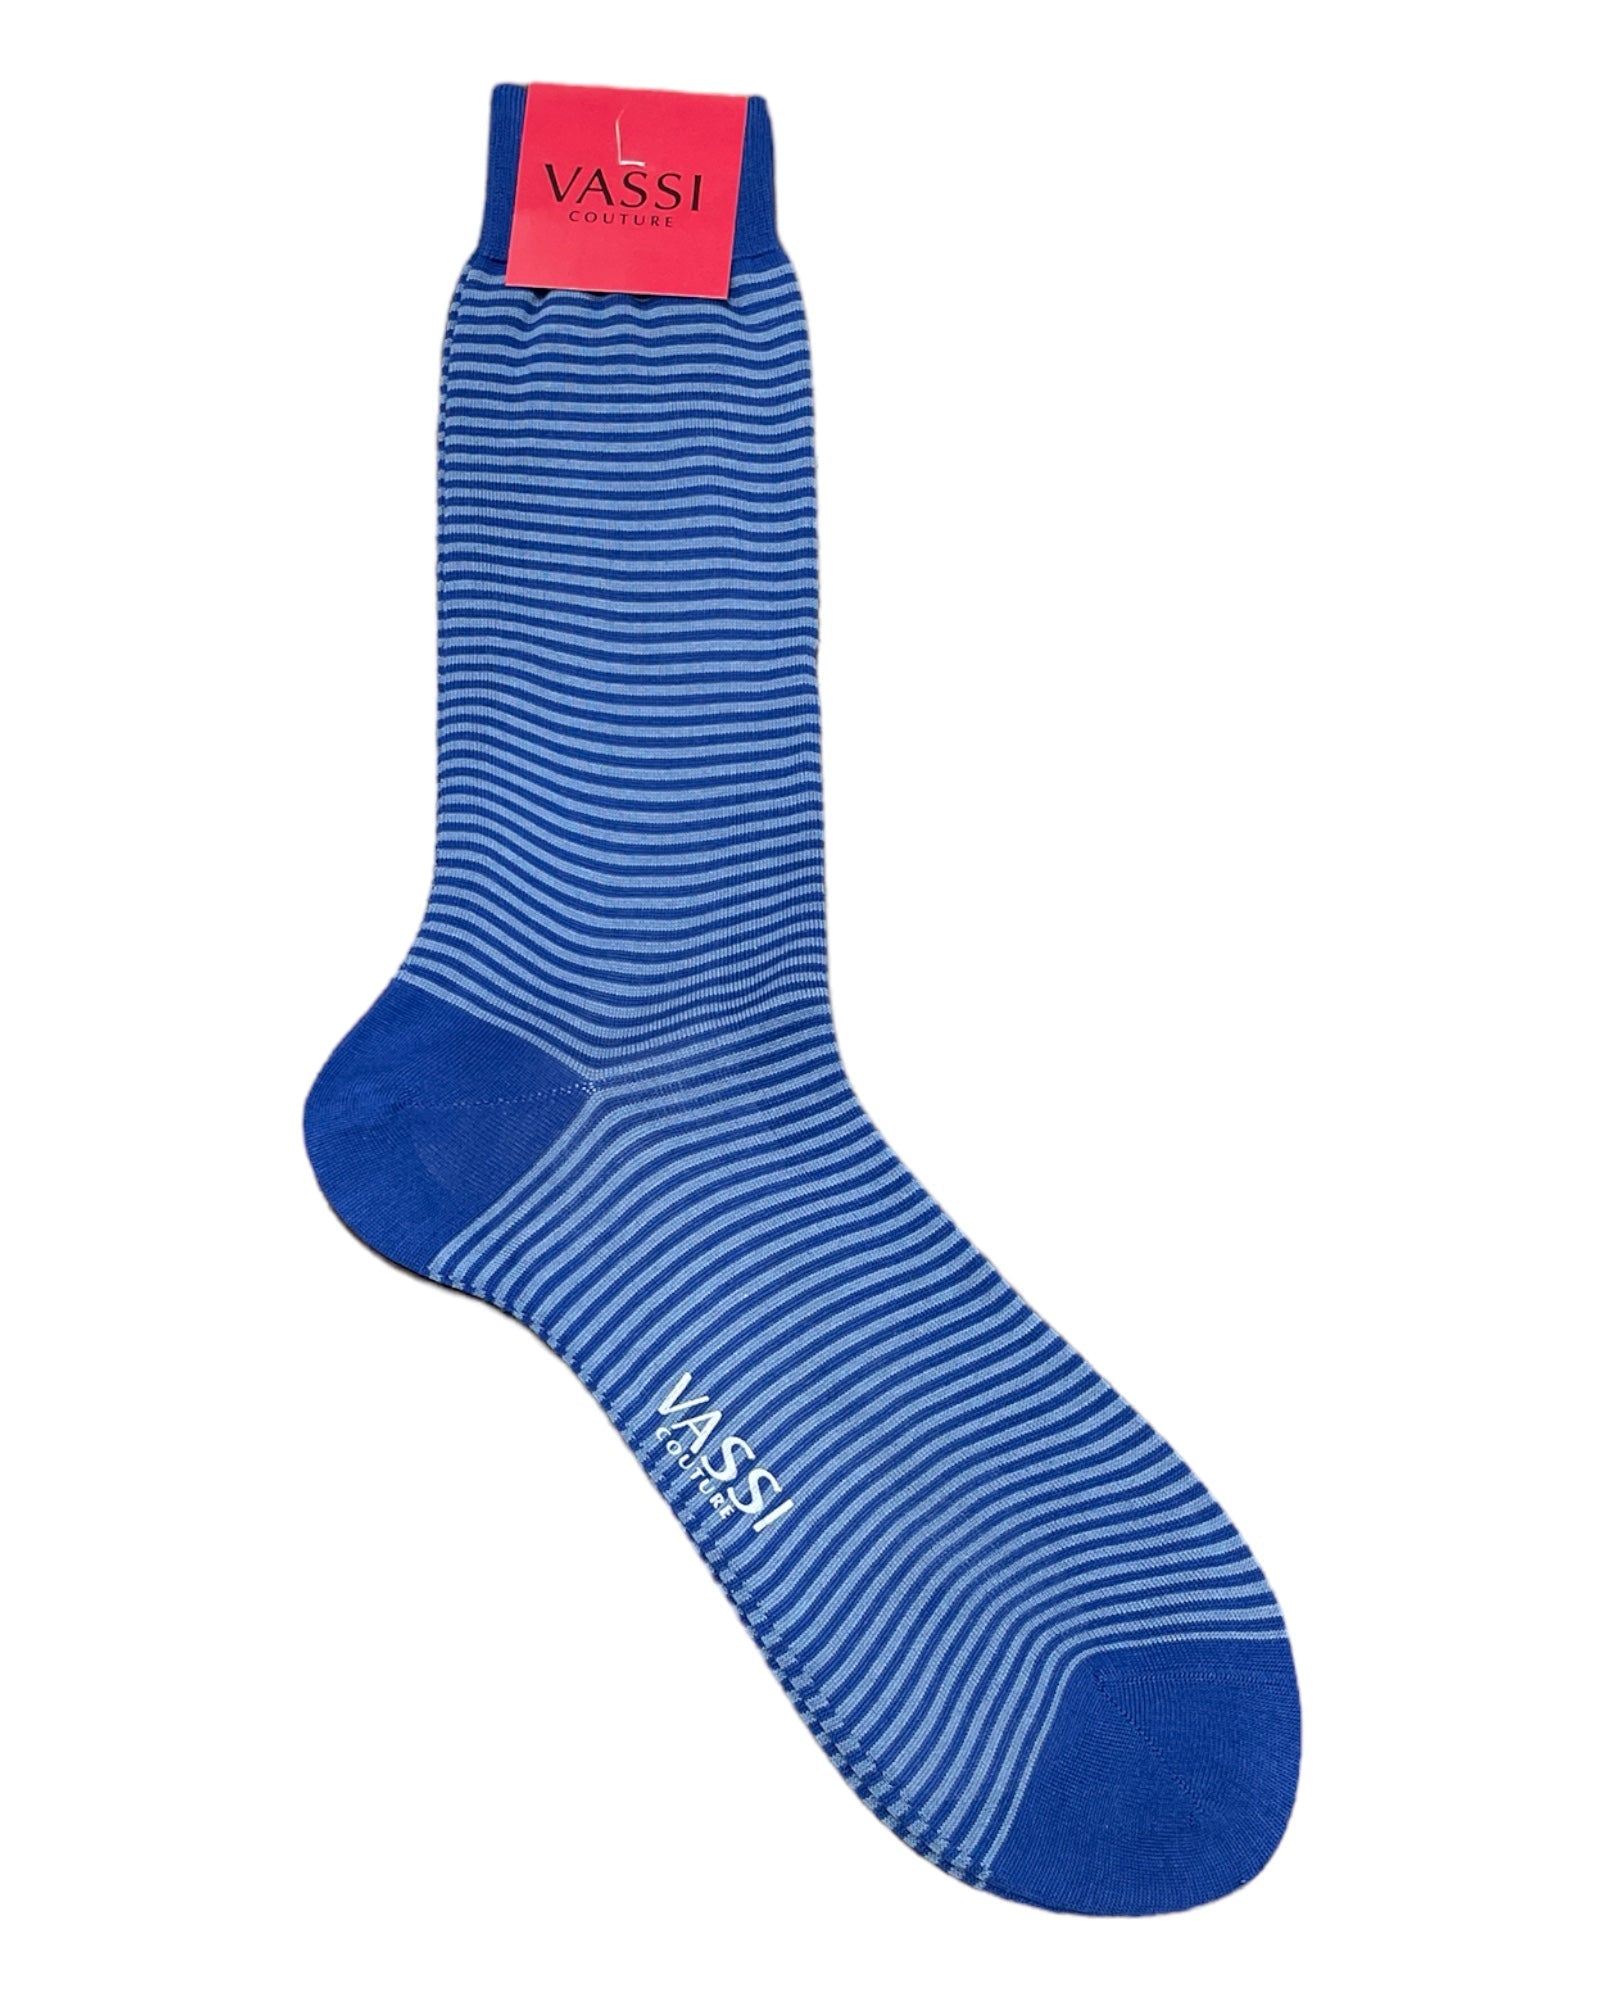 Extra-fine Horizontal Striped Cotton Socks - Indigo Blue Socks